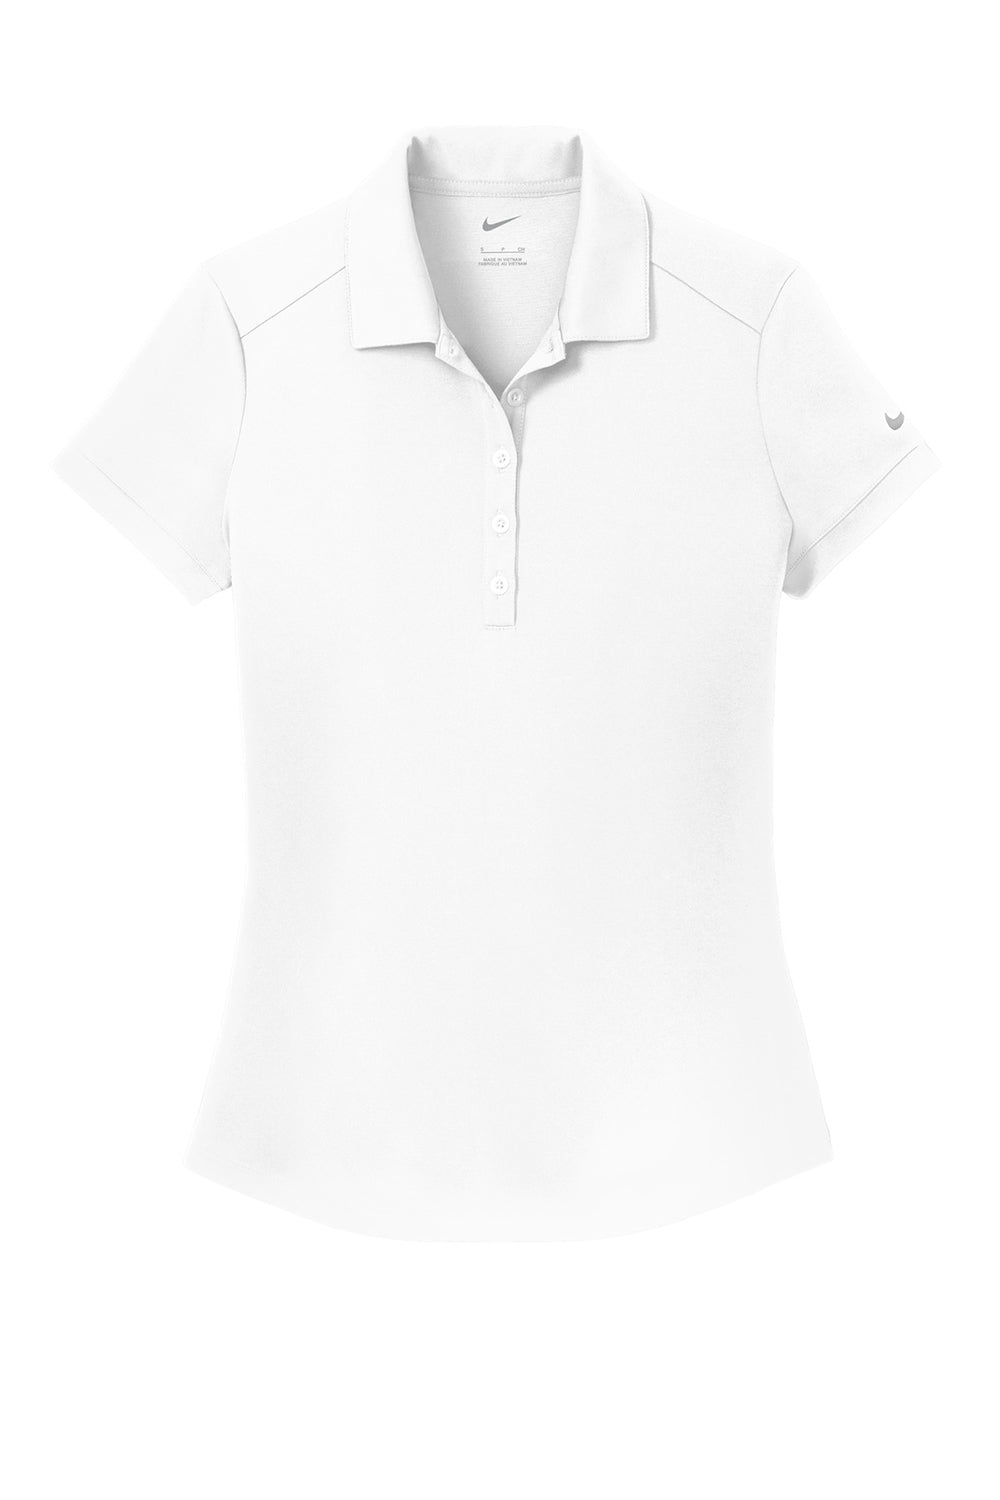 Nike 811807 Womens Players Dri-Fit Moisture Wicking Short Sleeve Polo Shirt White Flat Front